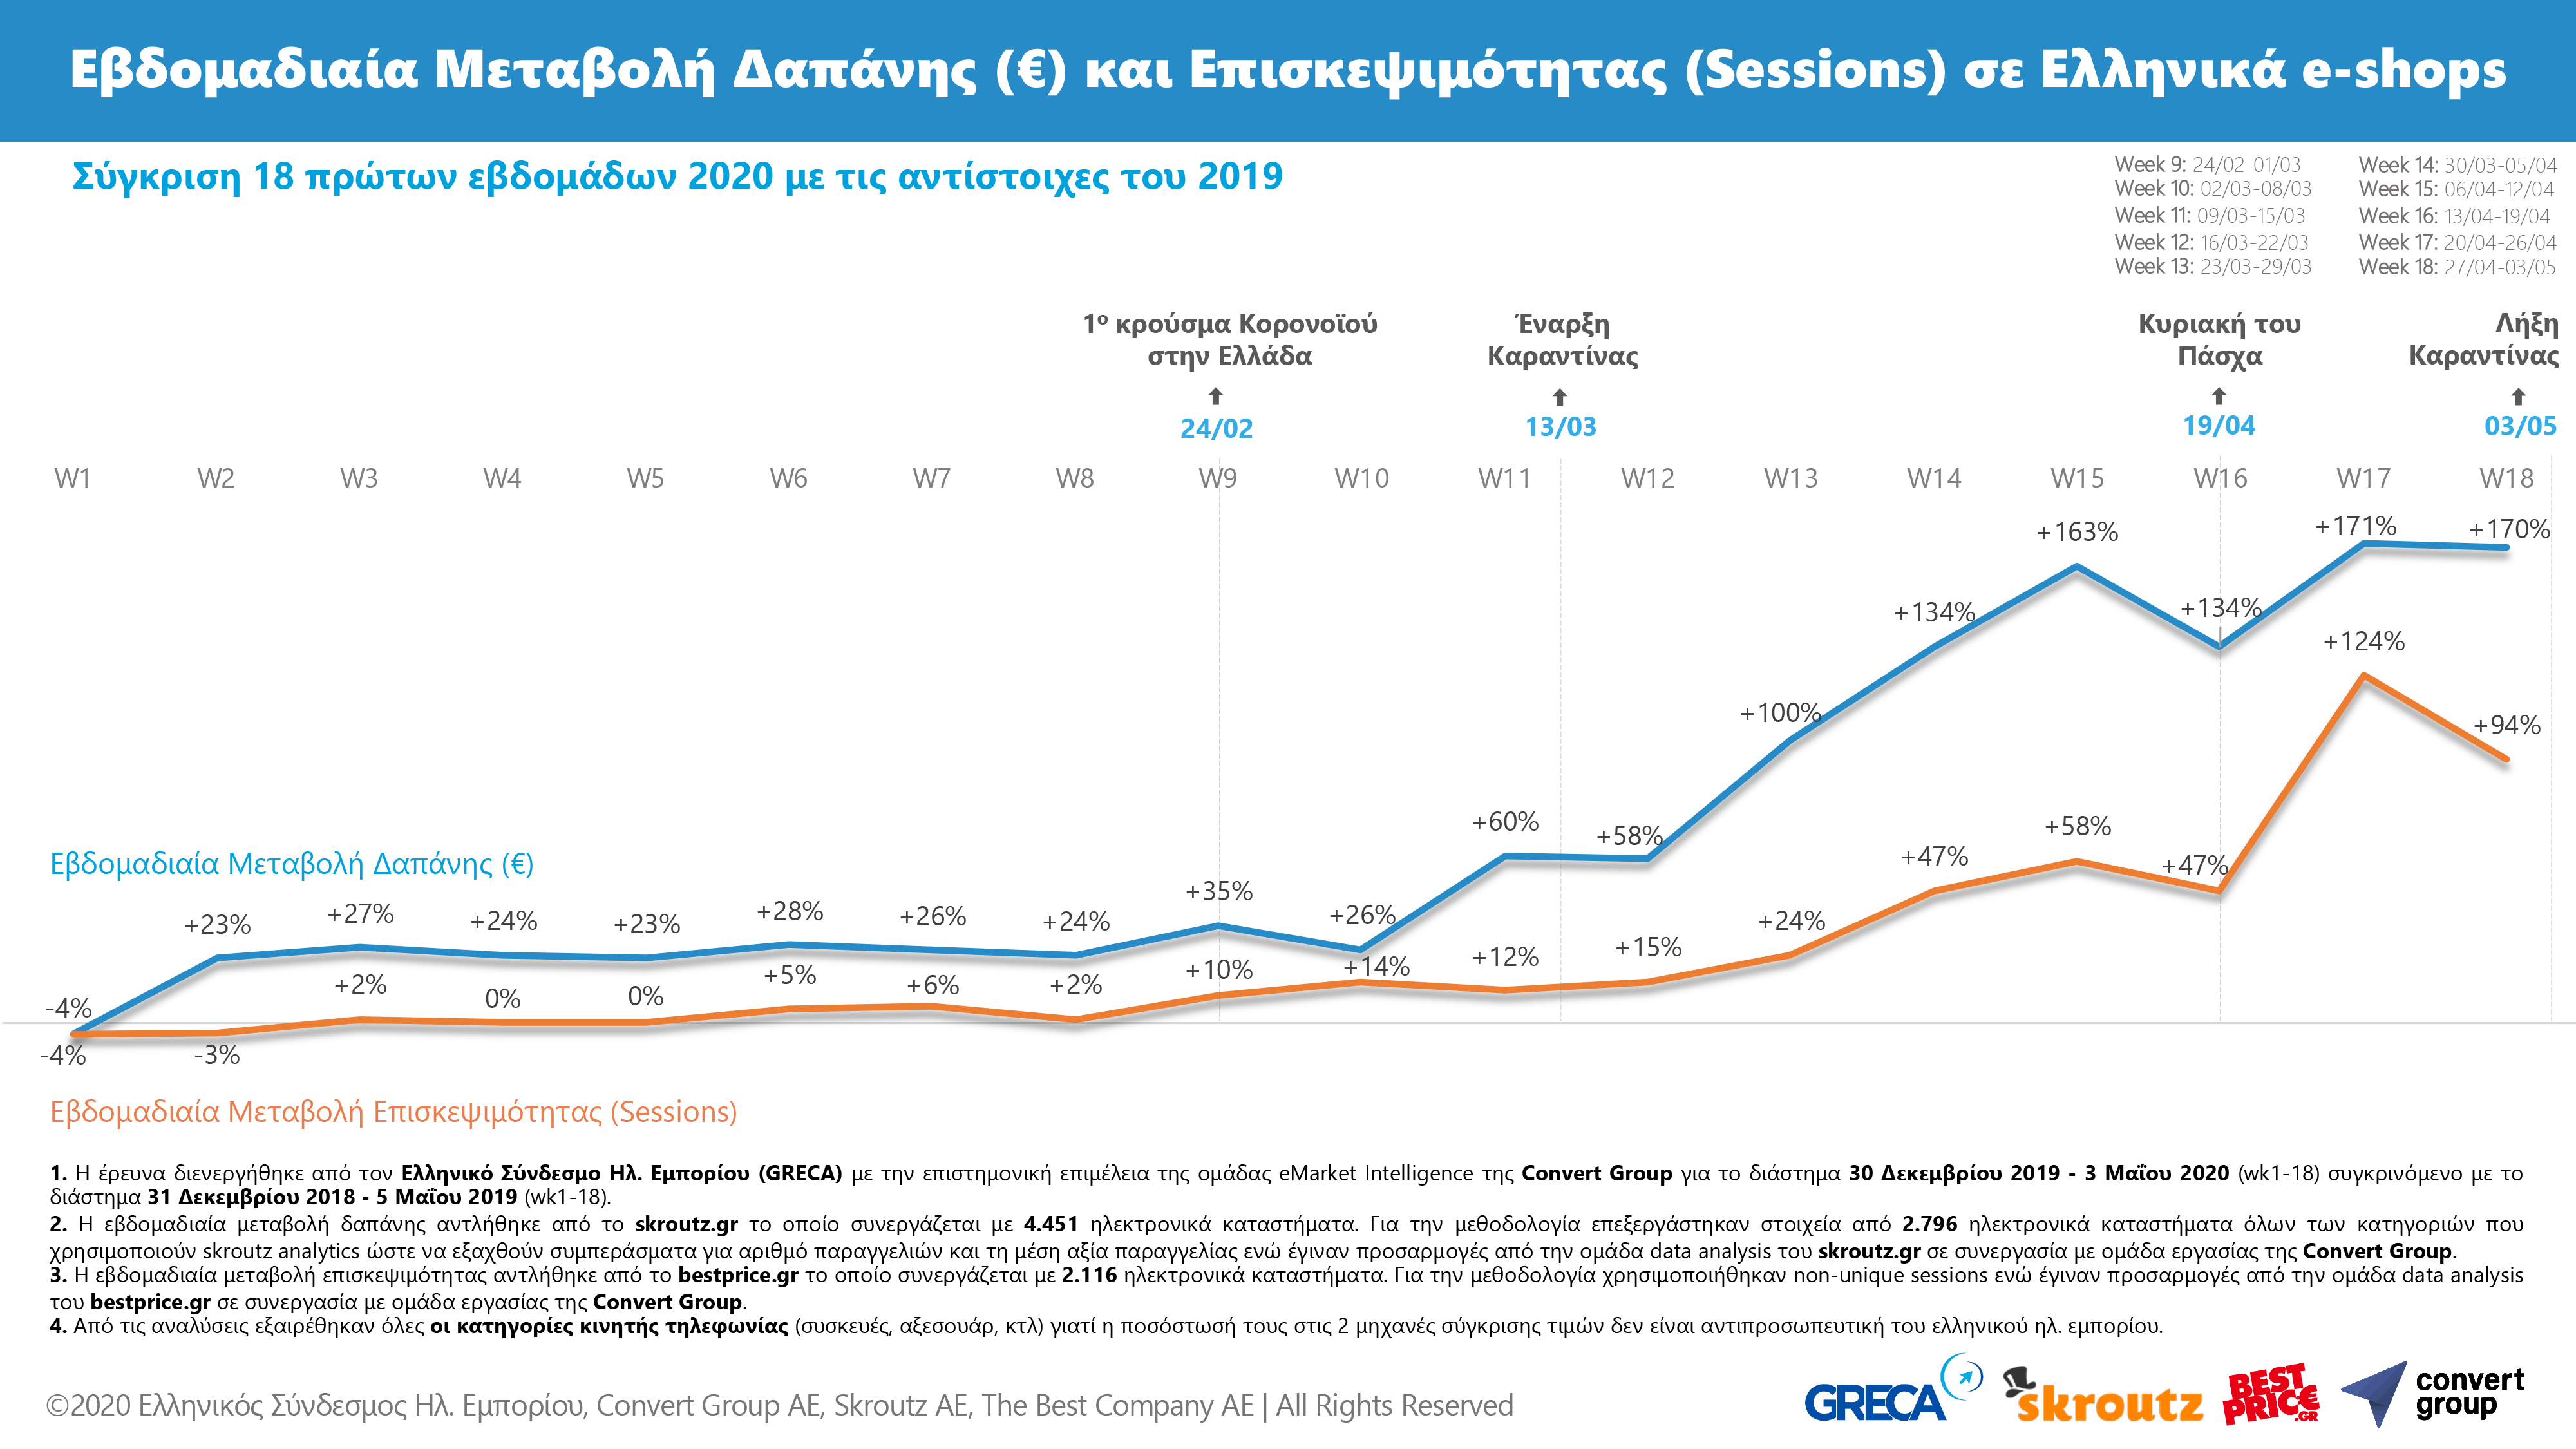 greek ecommerce wk18 2020 revenues and visits | Technea.gr - Χρήσιμα νέα τεχνολογίας